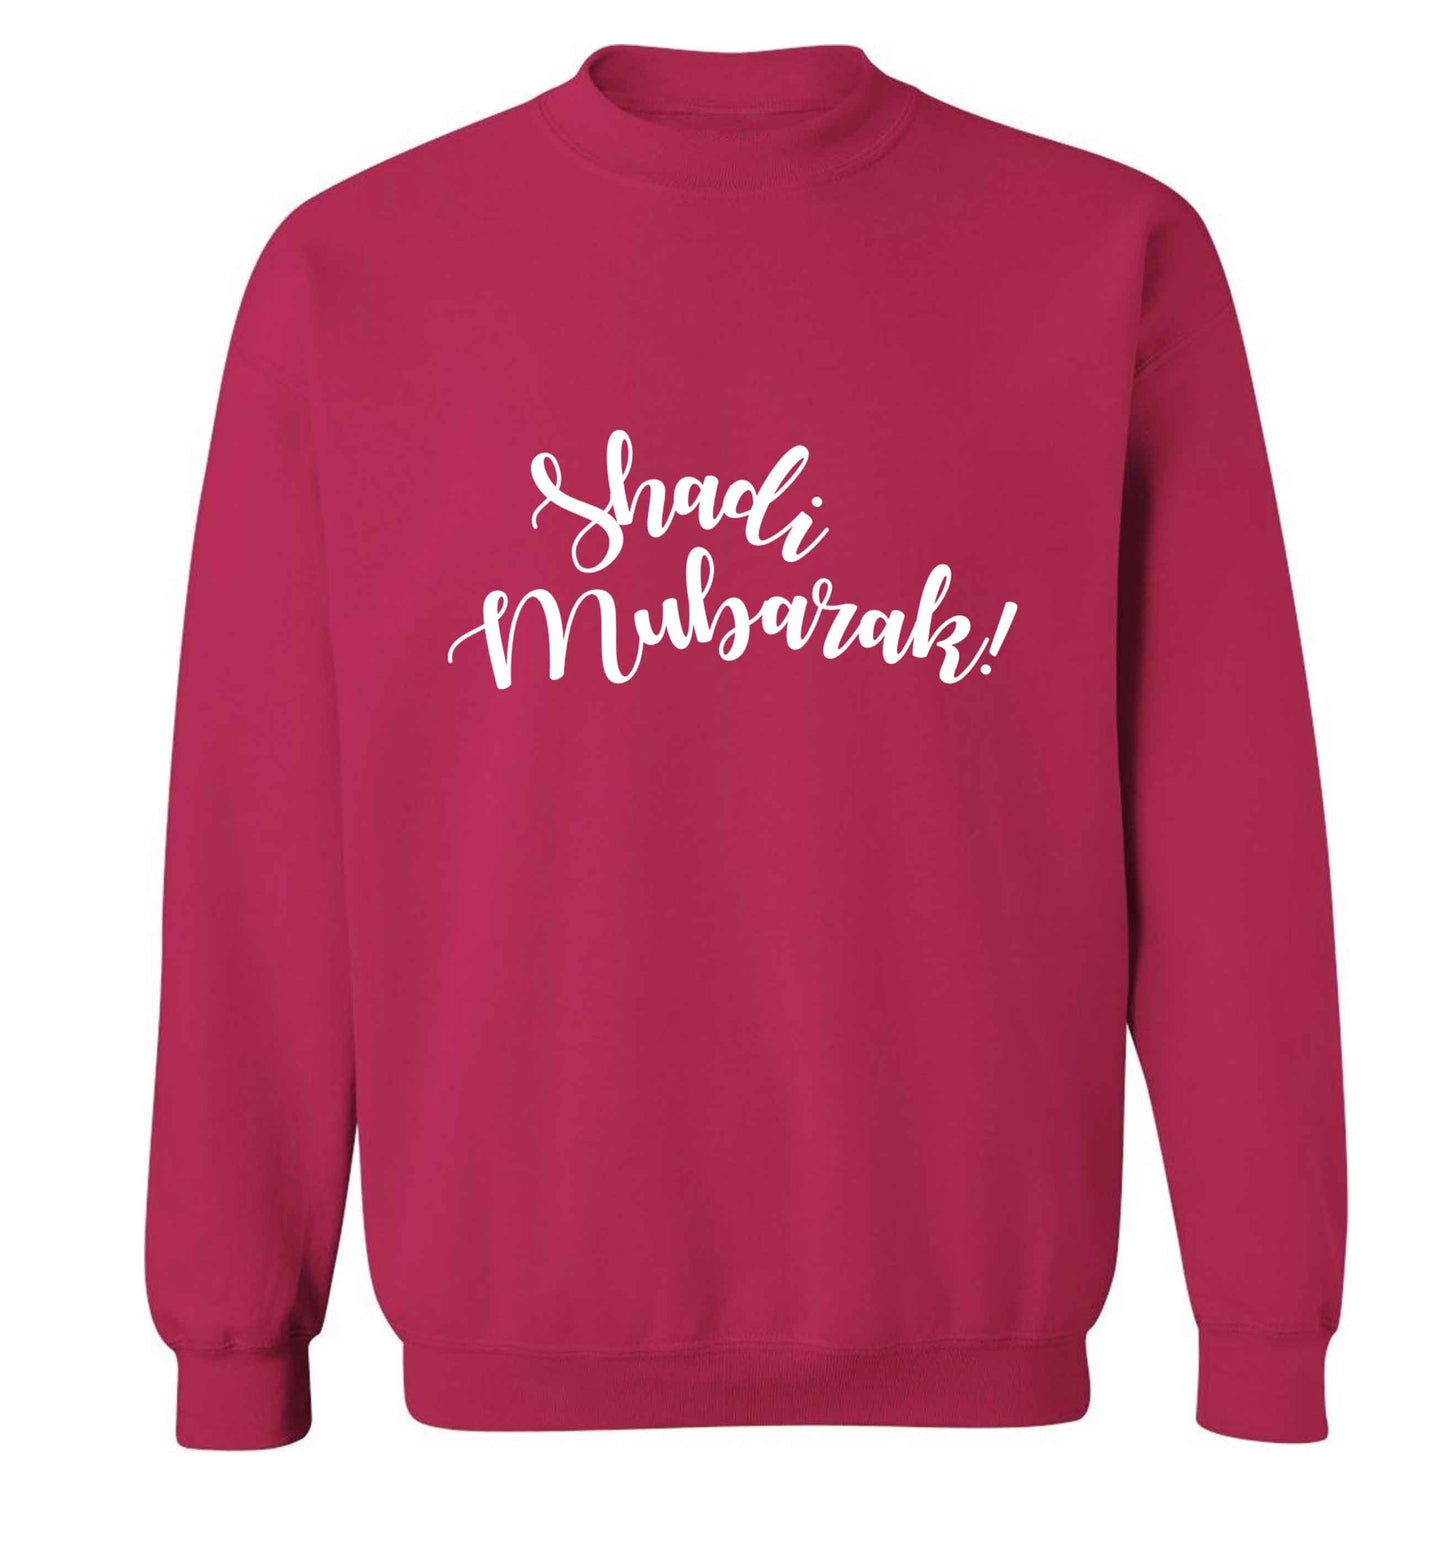 Shadi mubarak adult's unisex pink sweater 2XL